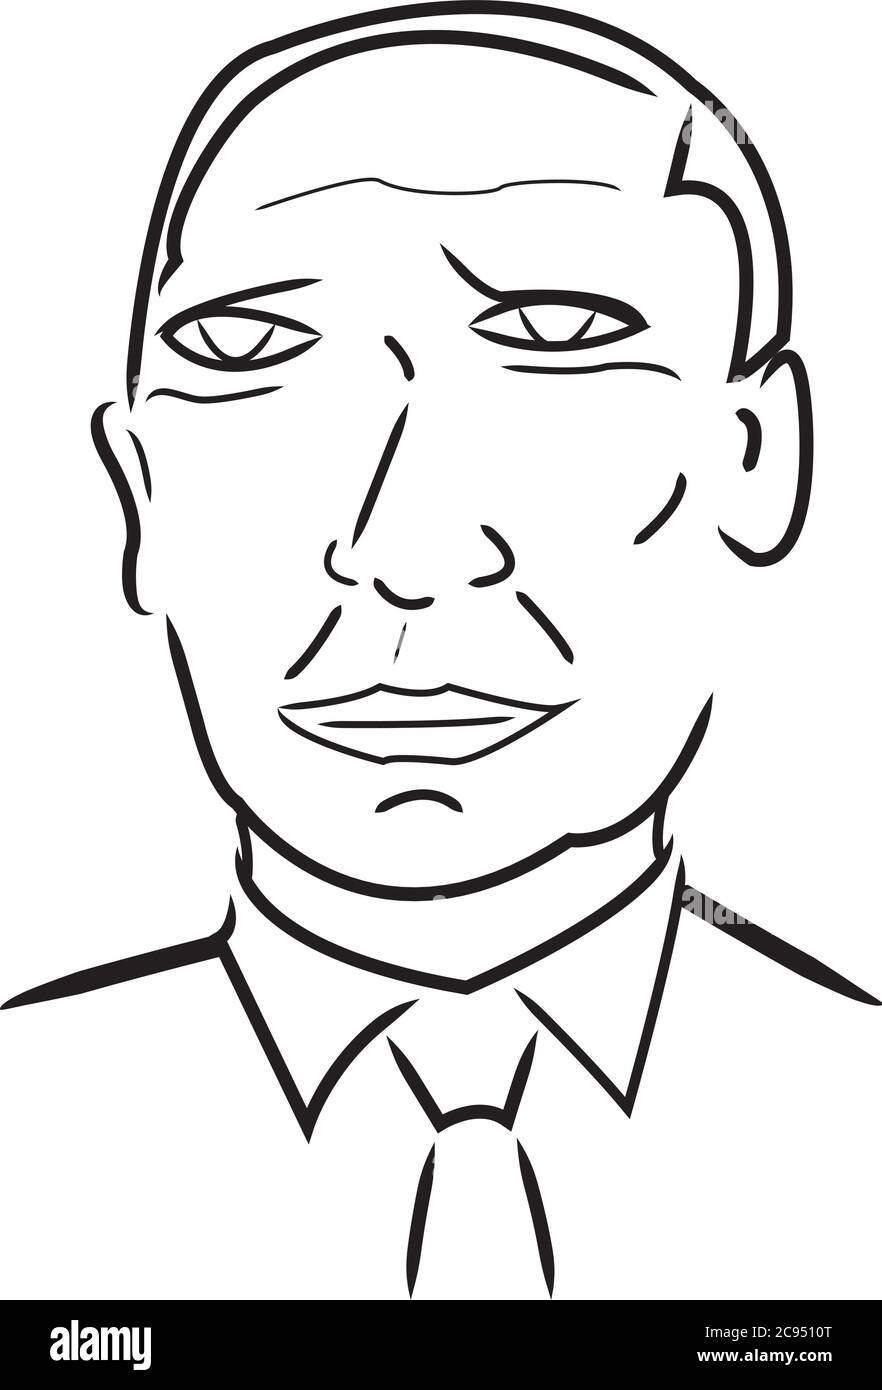 Vladimir Putin caricature or Vladimir cartoon, Russian president Stock Vector